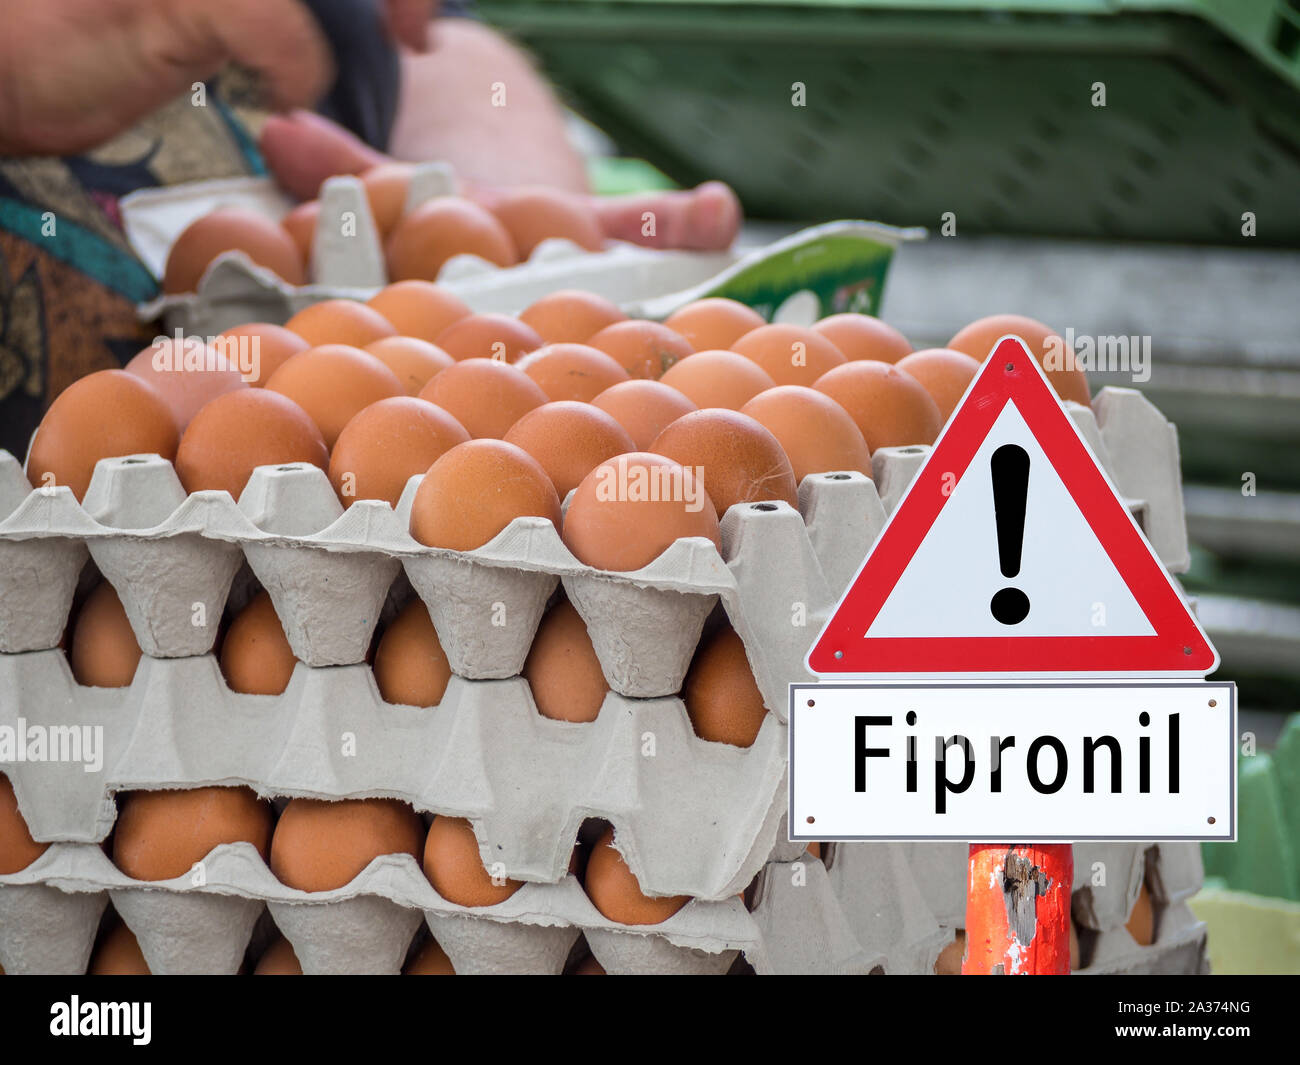 Fipronil warning sign Stock Photo